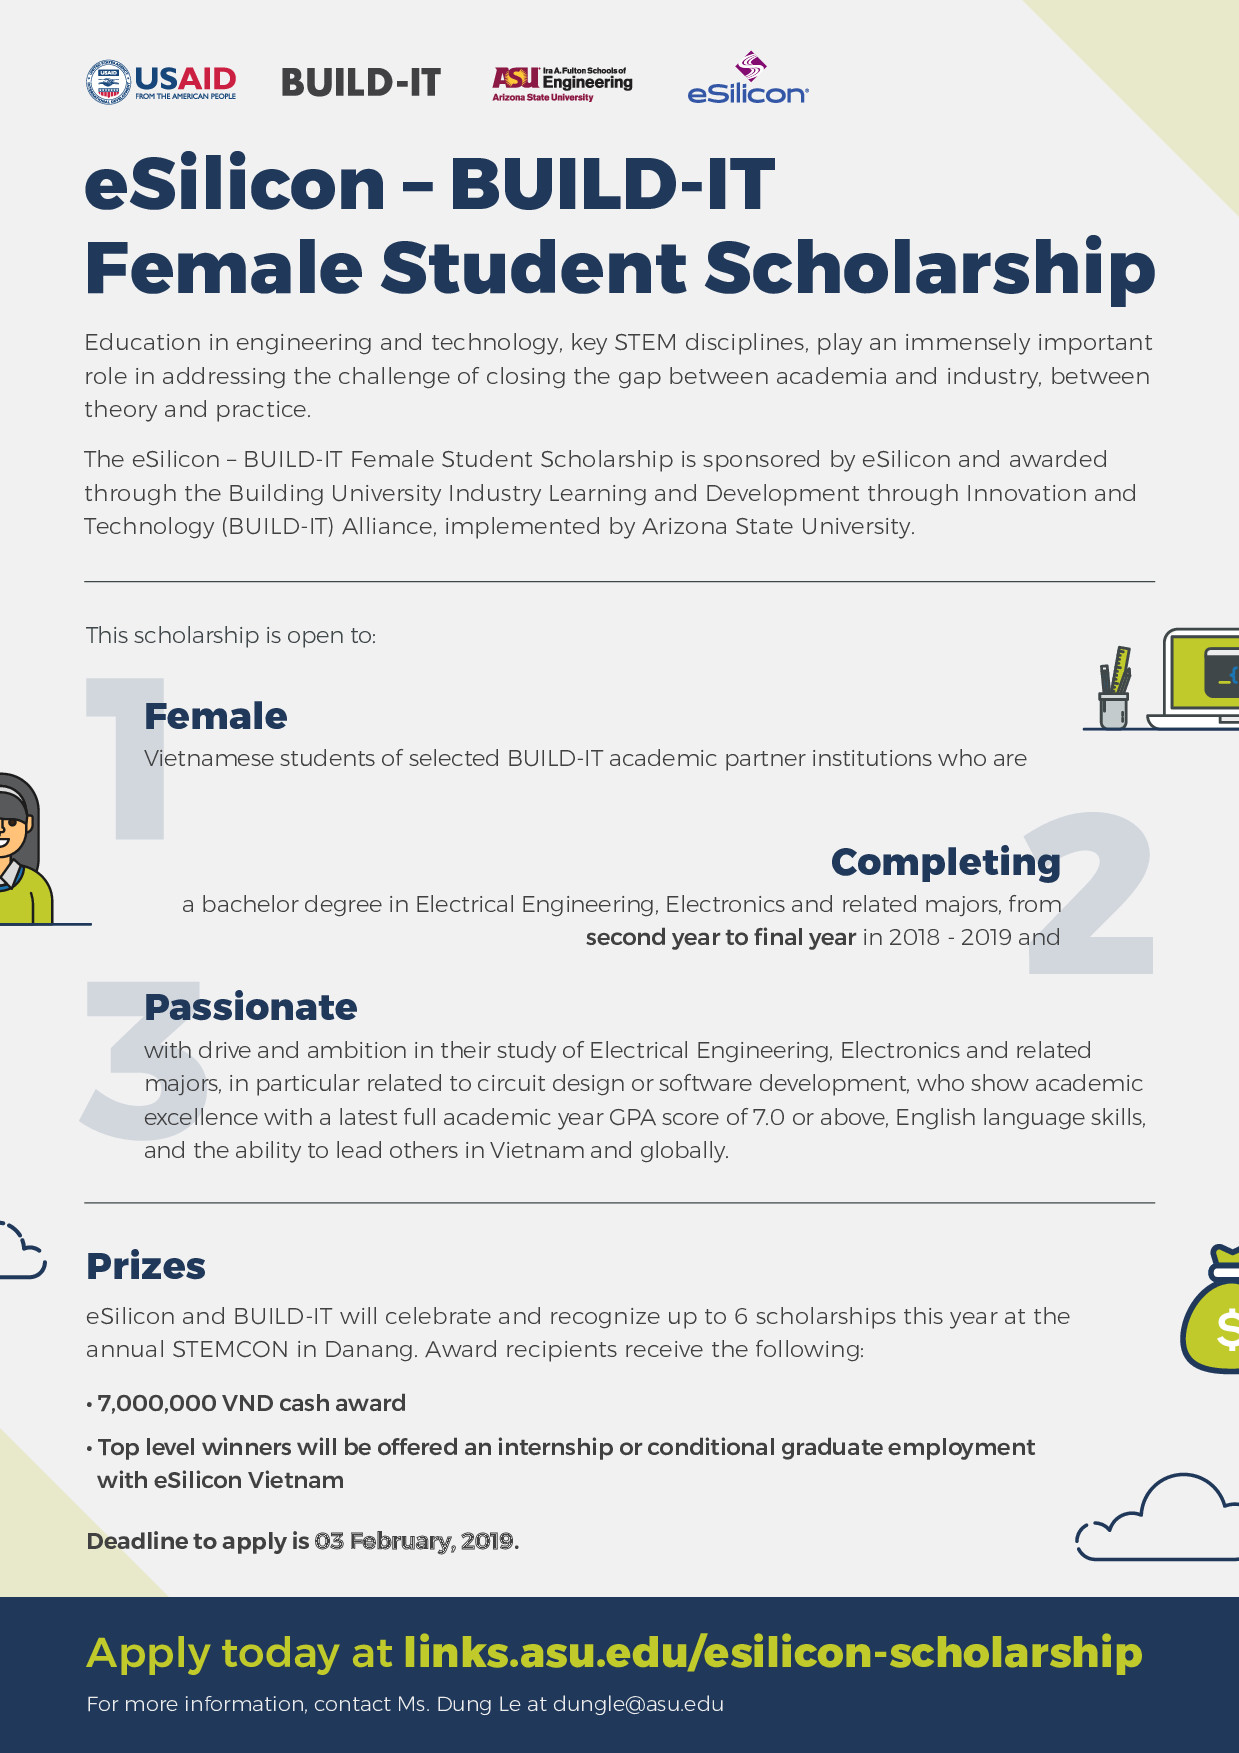 Thông tin về học bổng Nữ sinh “eSilicon BUILD-IT Female Engineering Student Scholarship”